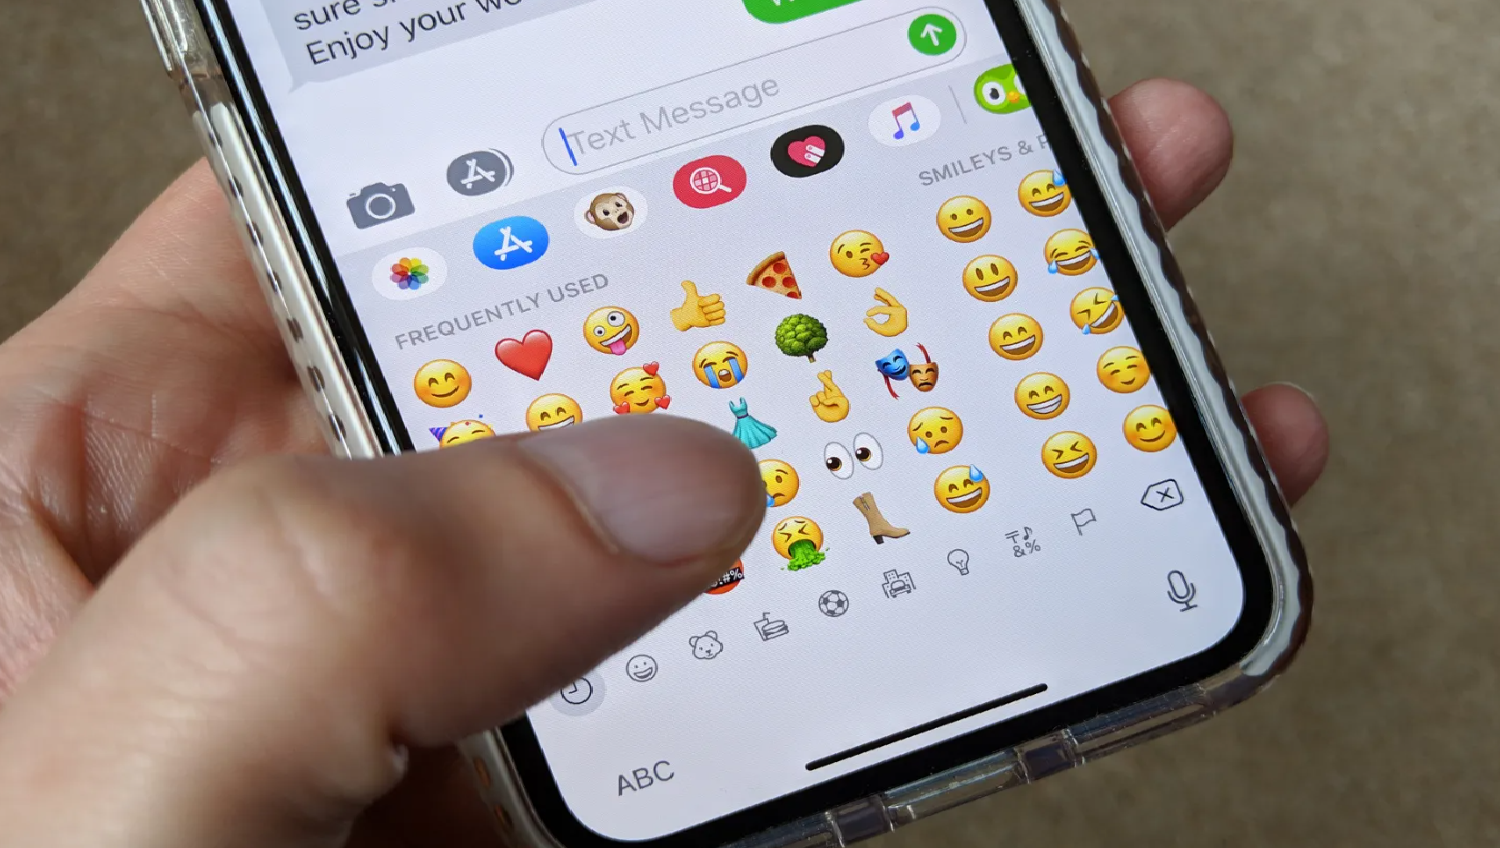 replacing words with emojis